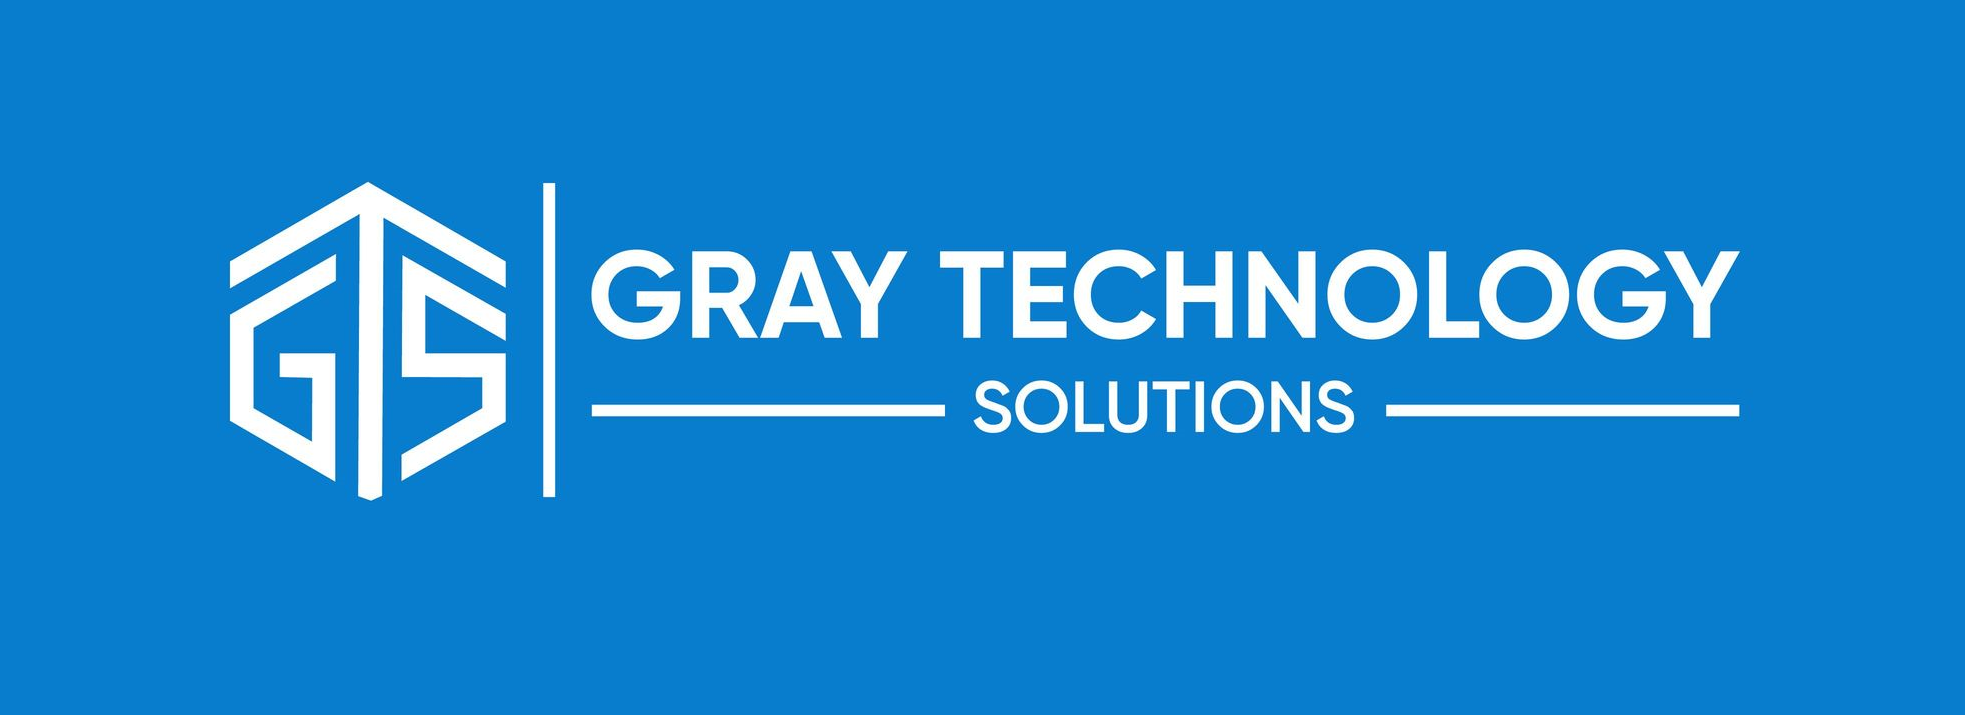 Gray Technology